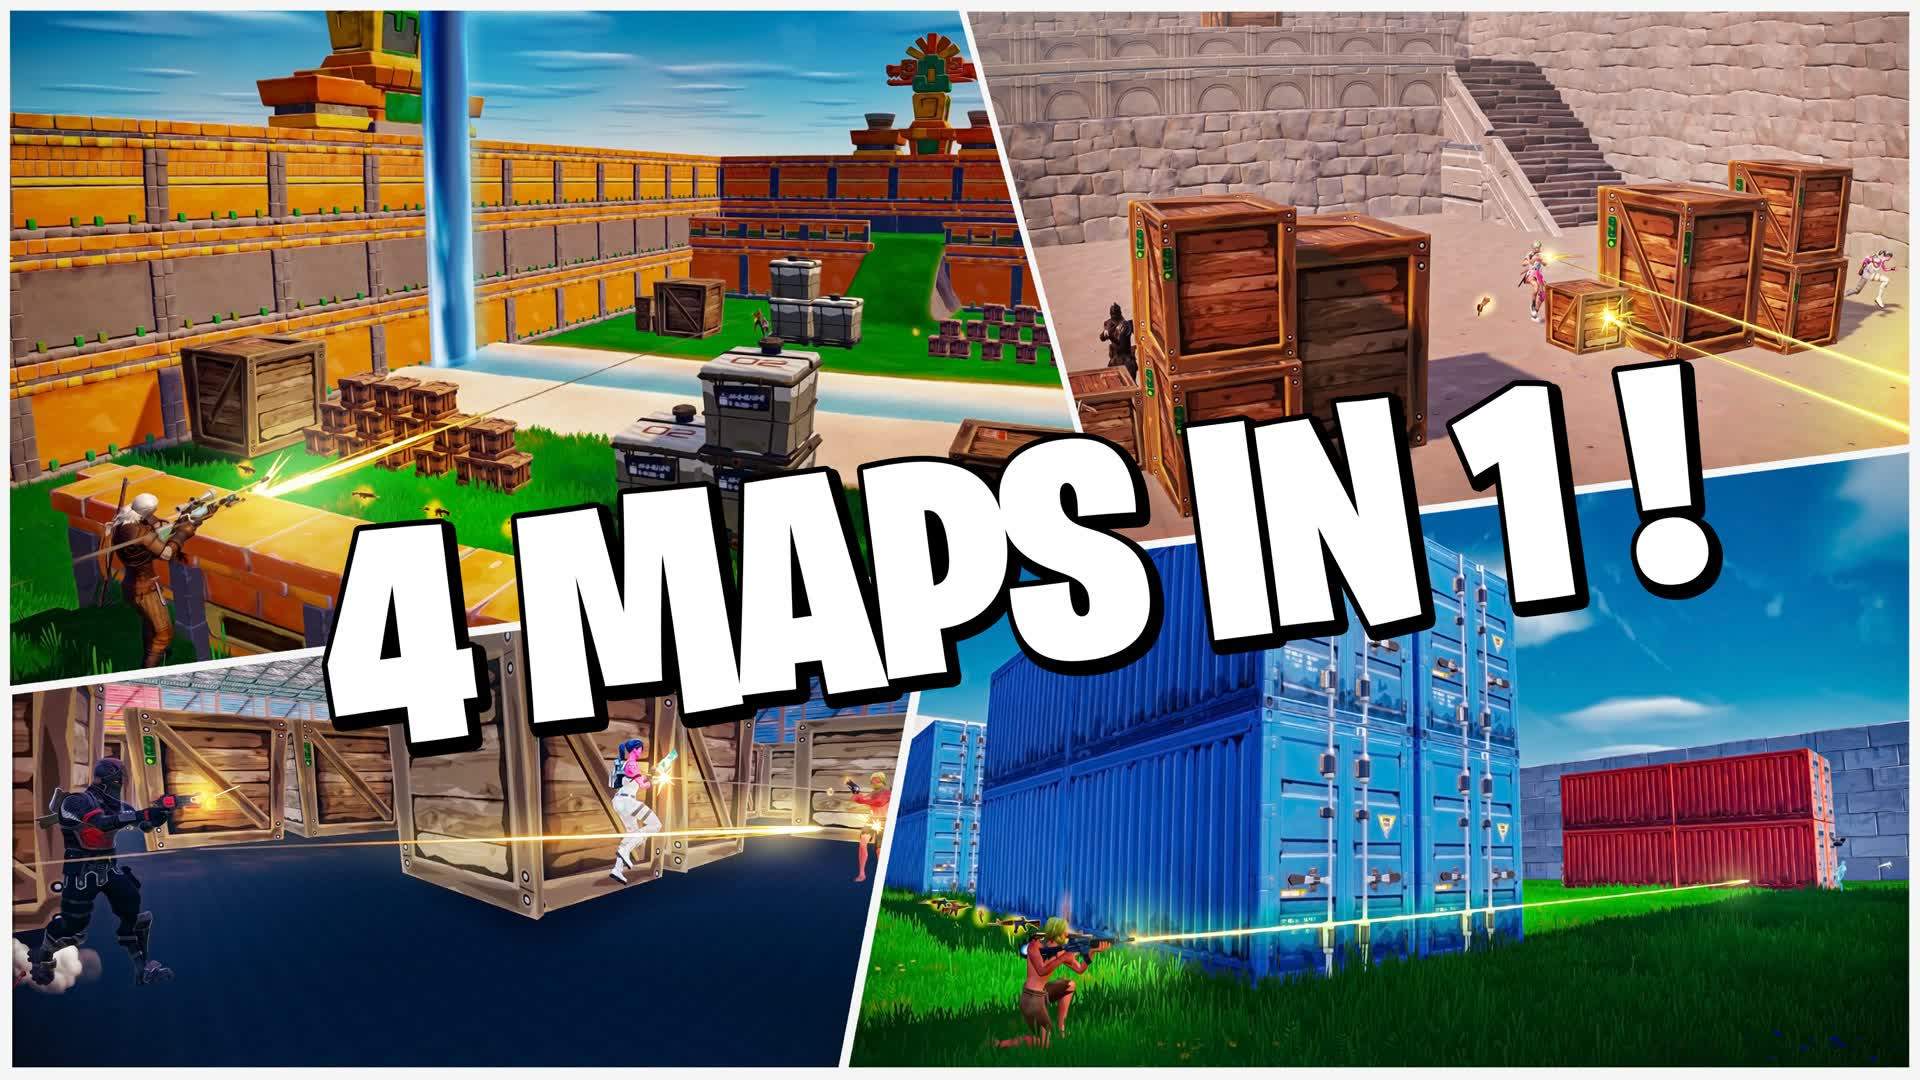 4 Maps in 1 ! 10v10 Deathmatch